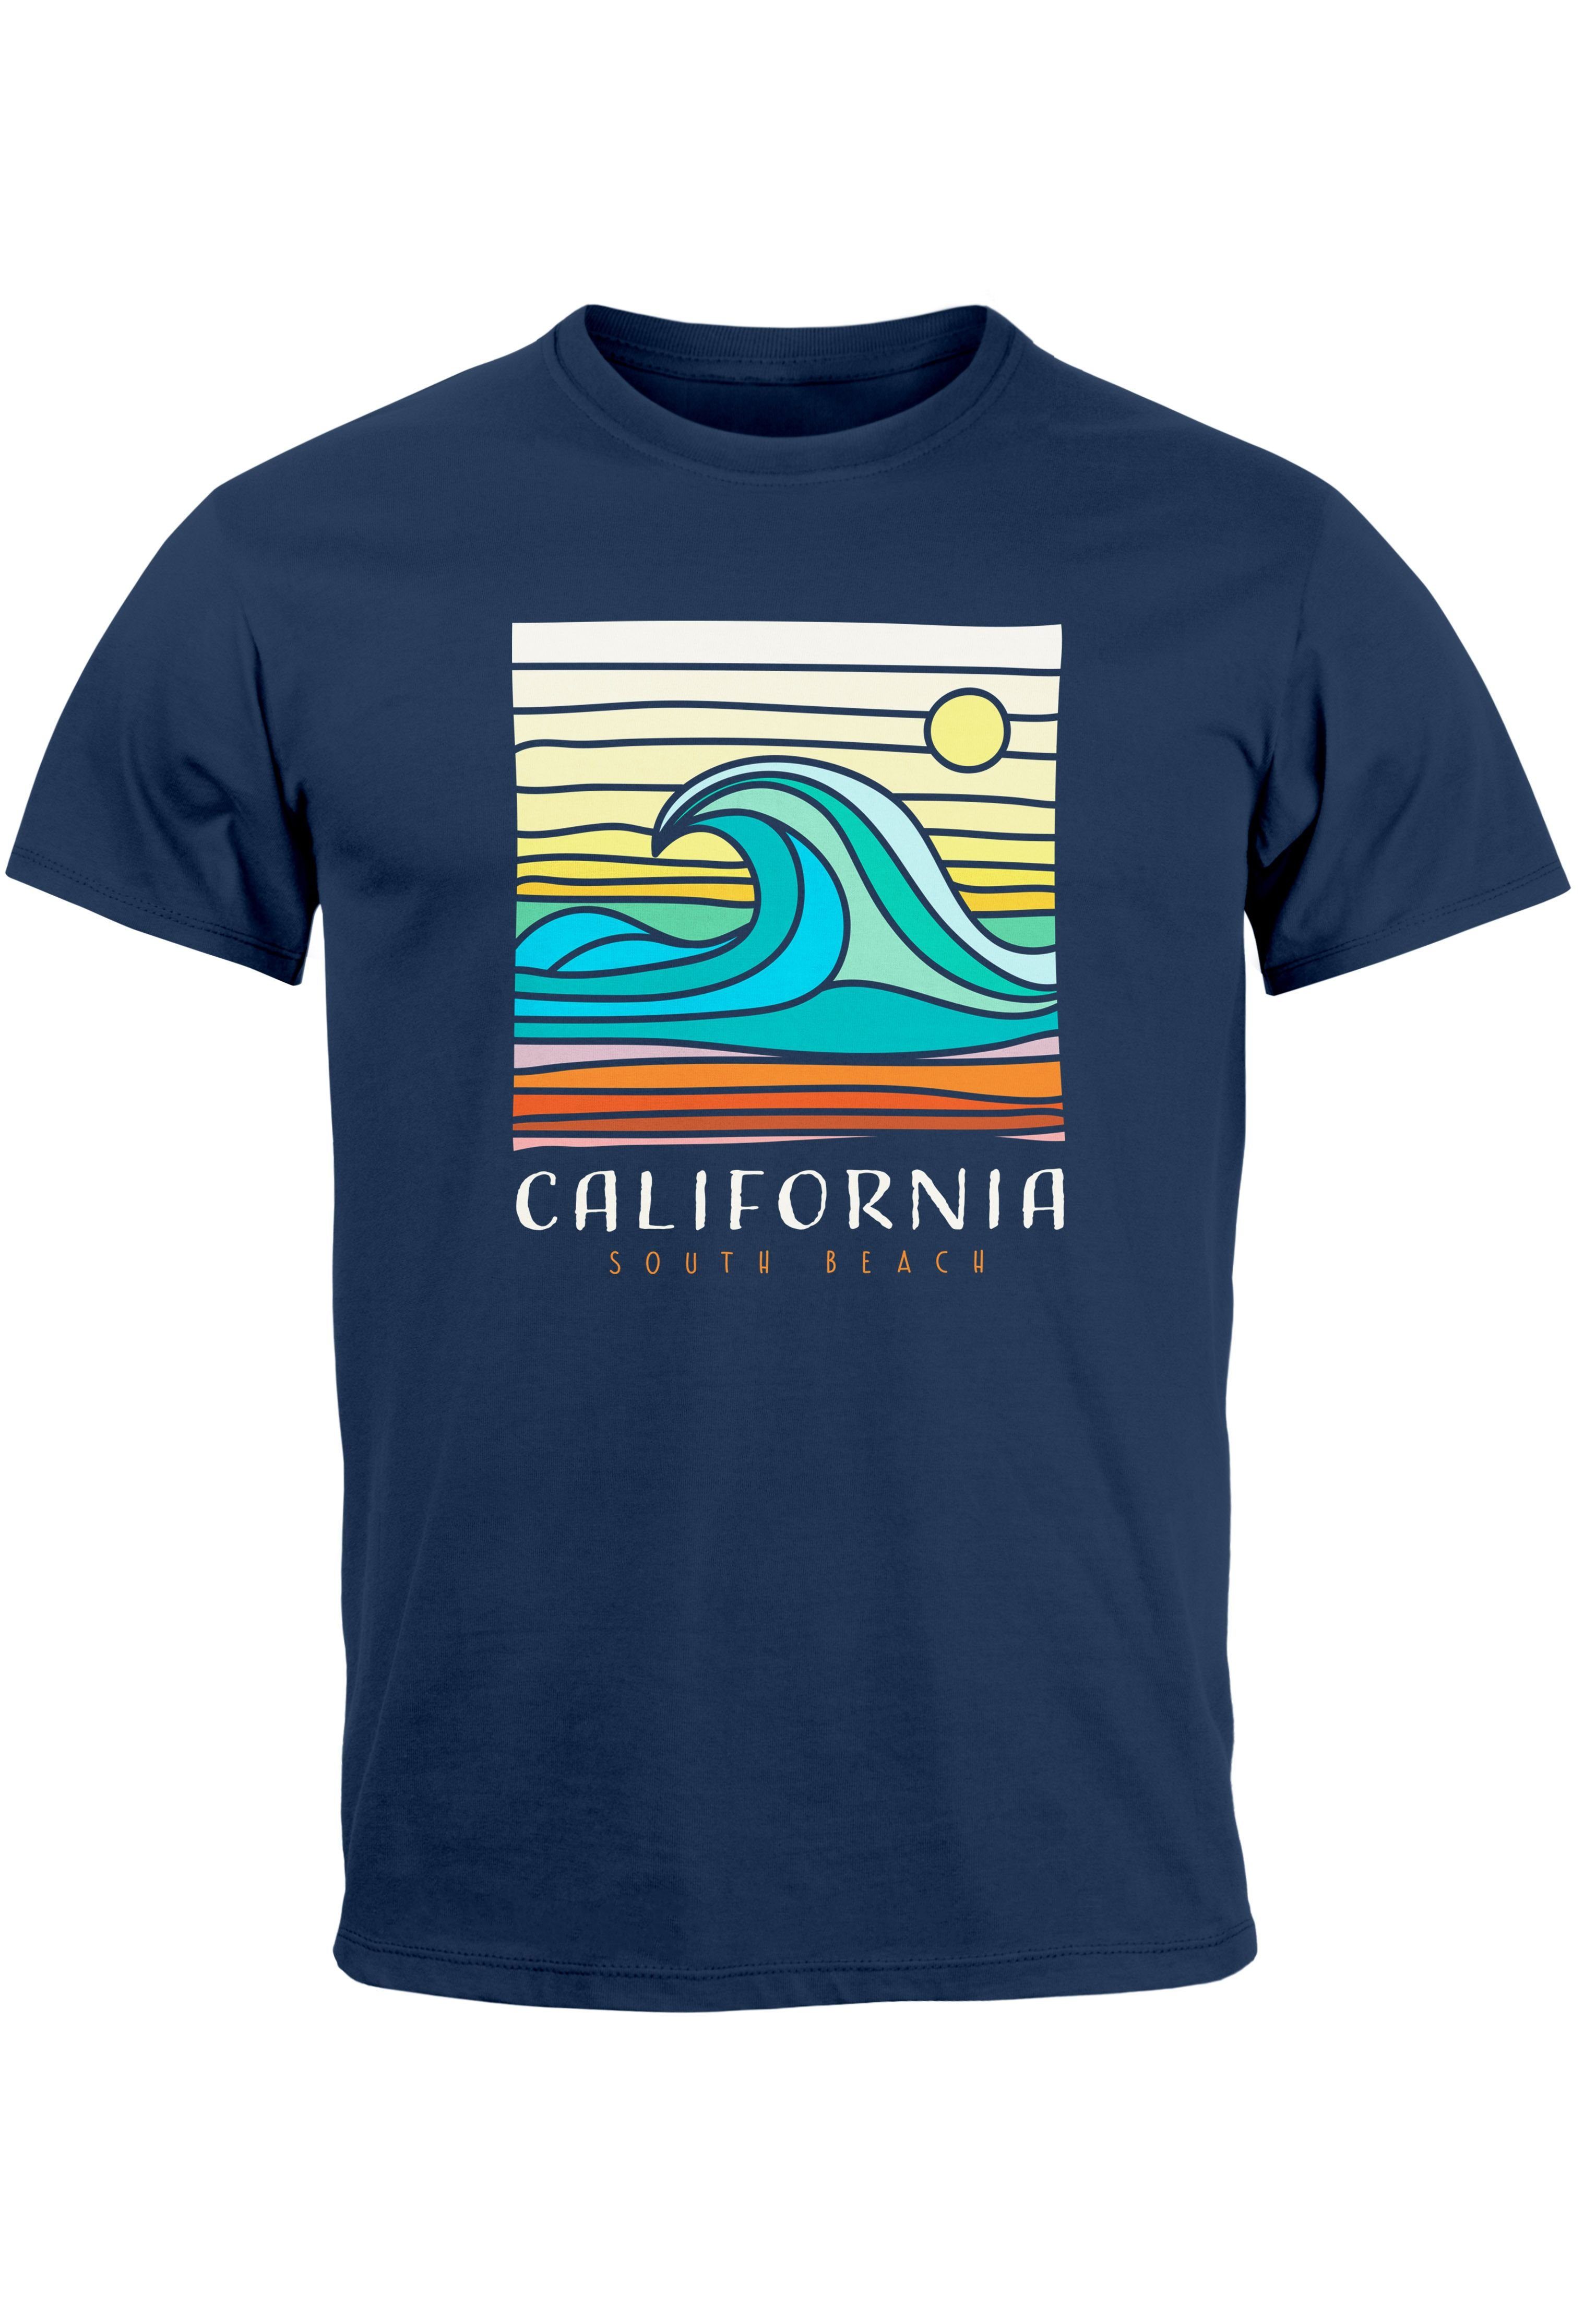 Neverless Print-Shirt Herren T-Shirt California South Beach Welle Wave Surfing Print Aufdruc mit Print navy